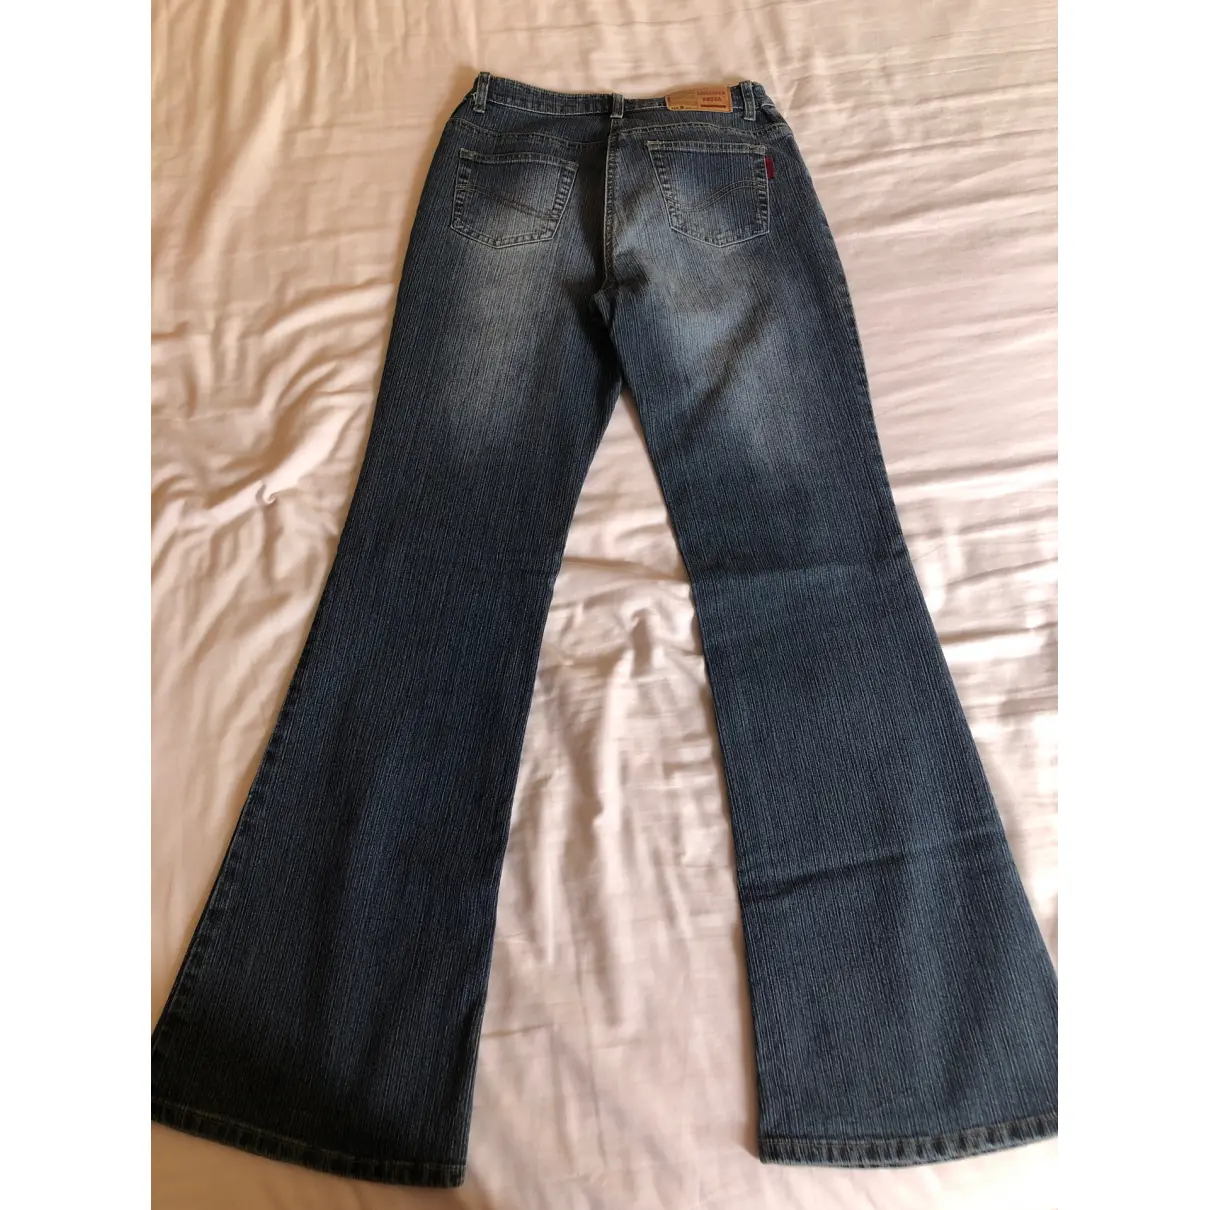 Buy Libelula Large jeans online